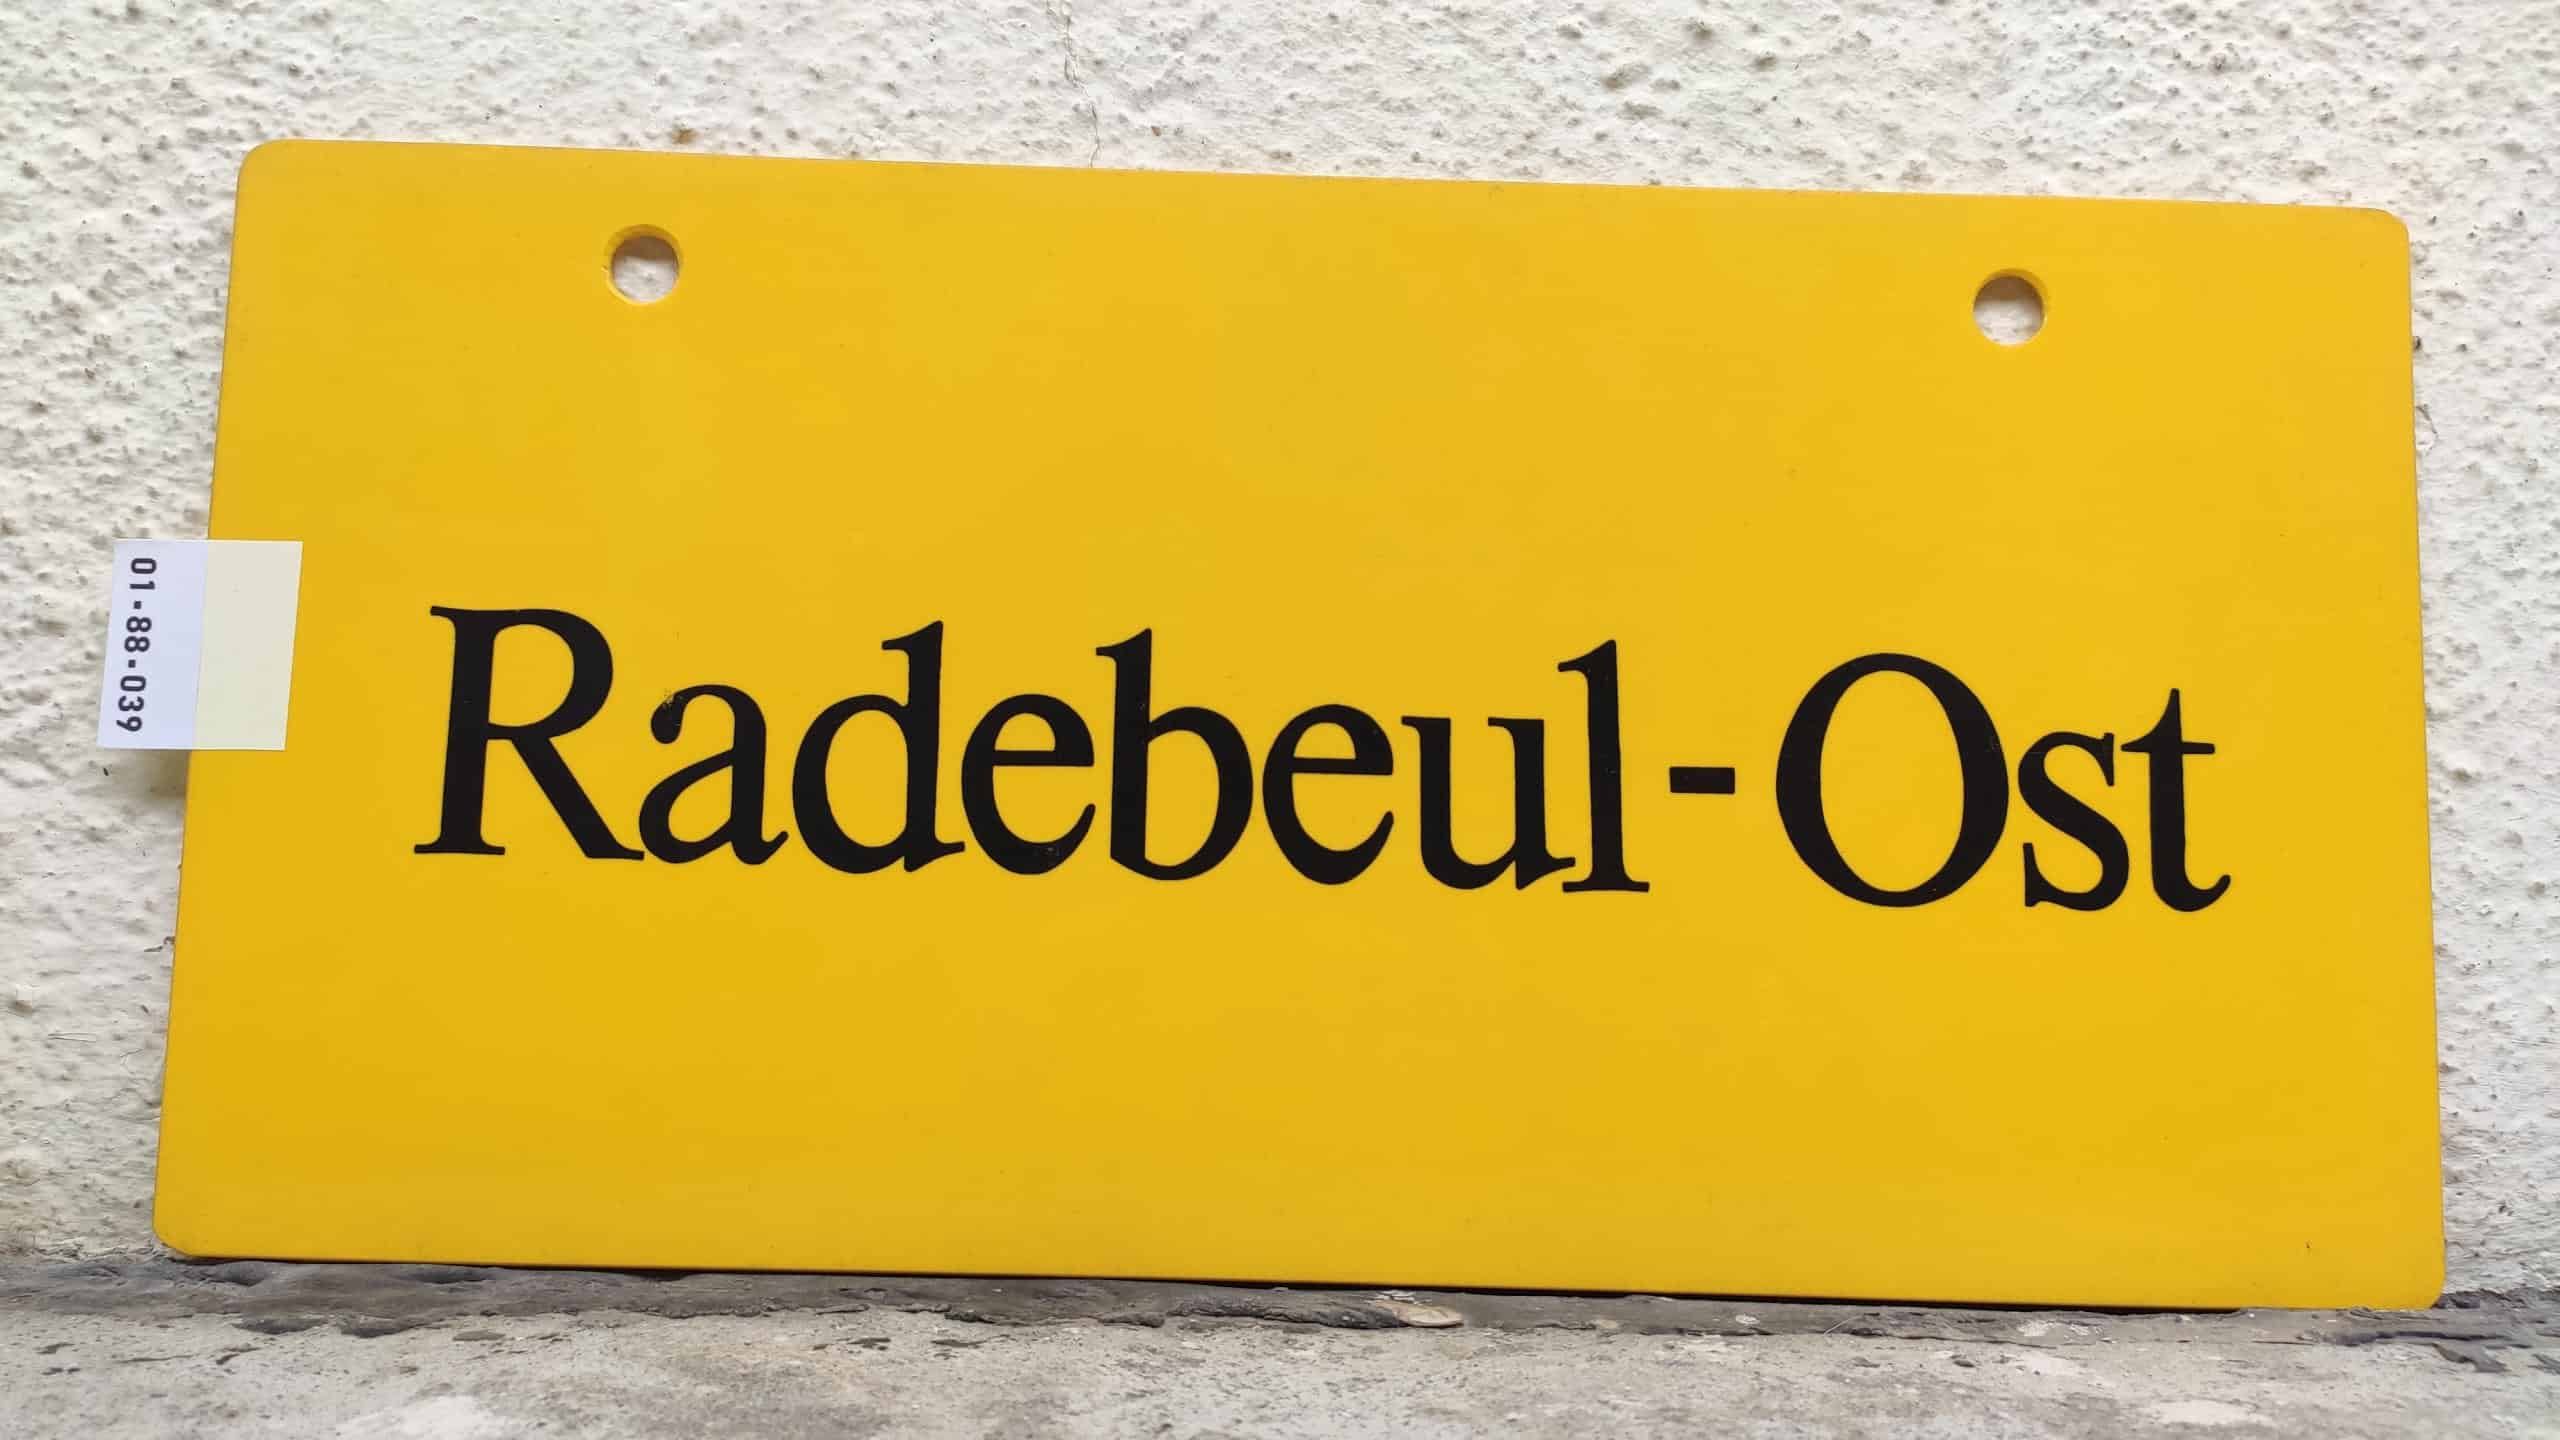 Radebeul-Ost